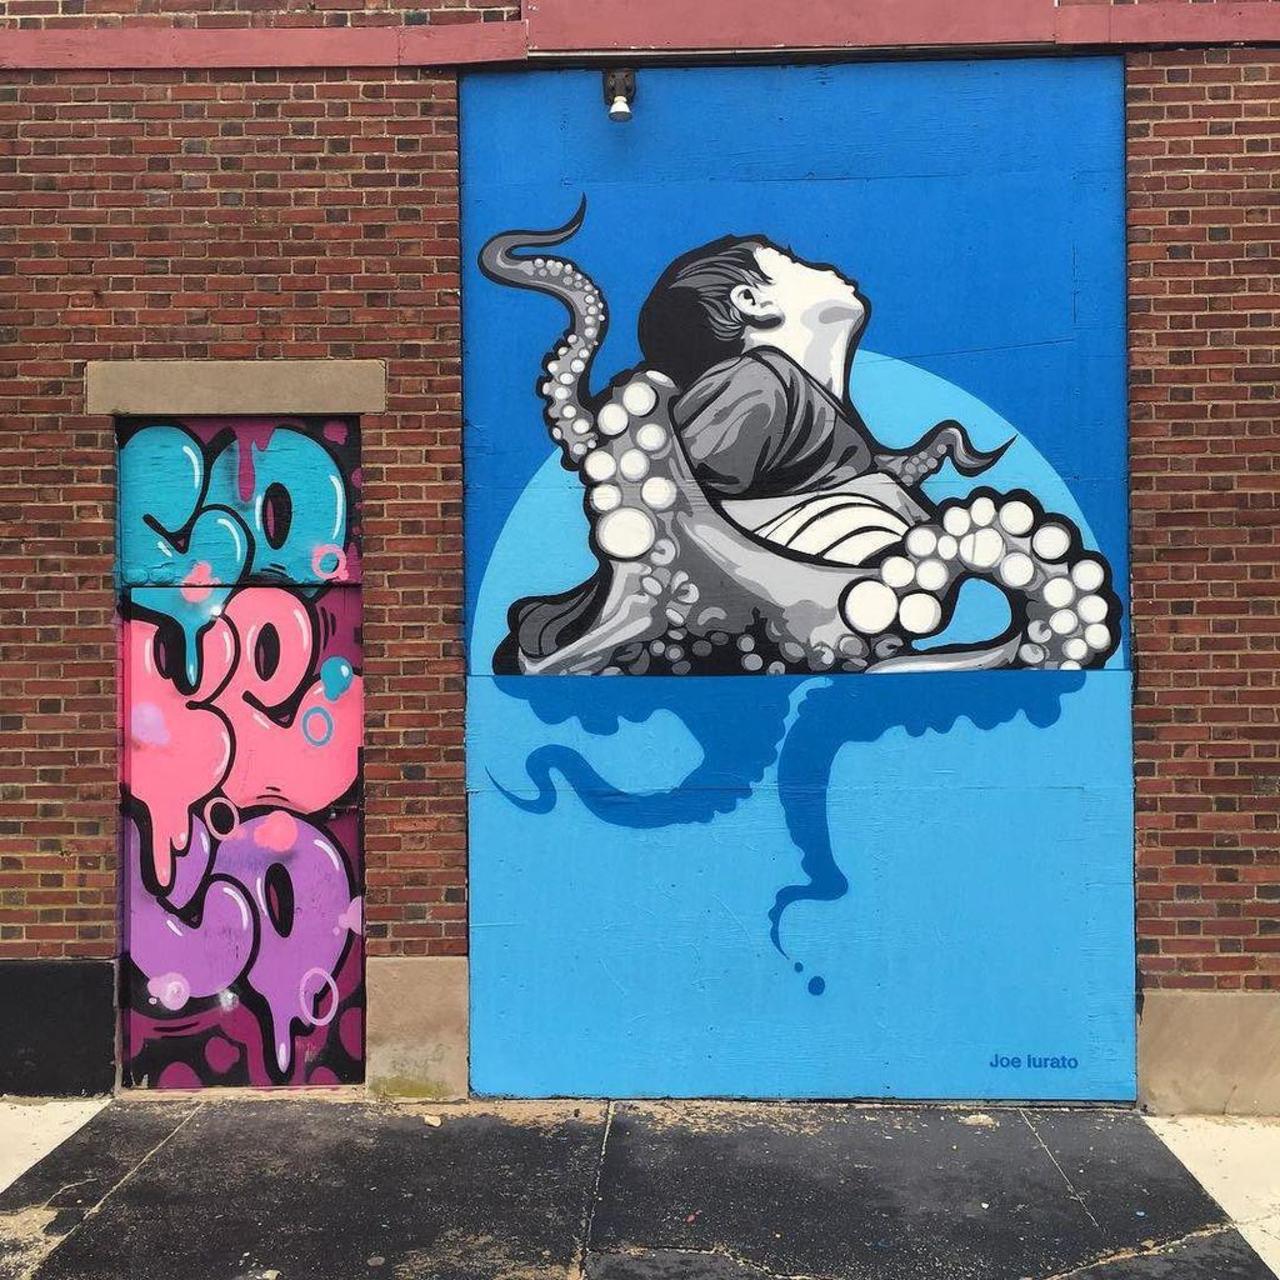 Mural Arts
Asbury Park, NJ
#joelurato #graff #graffiti #graffitinj #outsider #outsiderart #street #streetart #stree… http://t.co/R5giSKRIGo